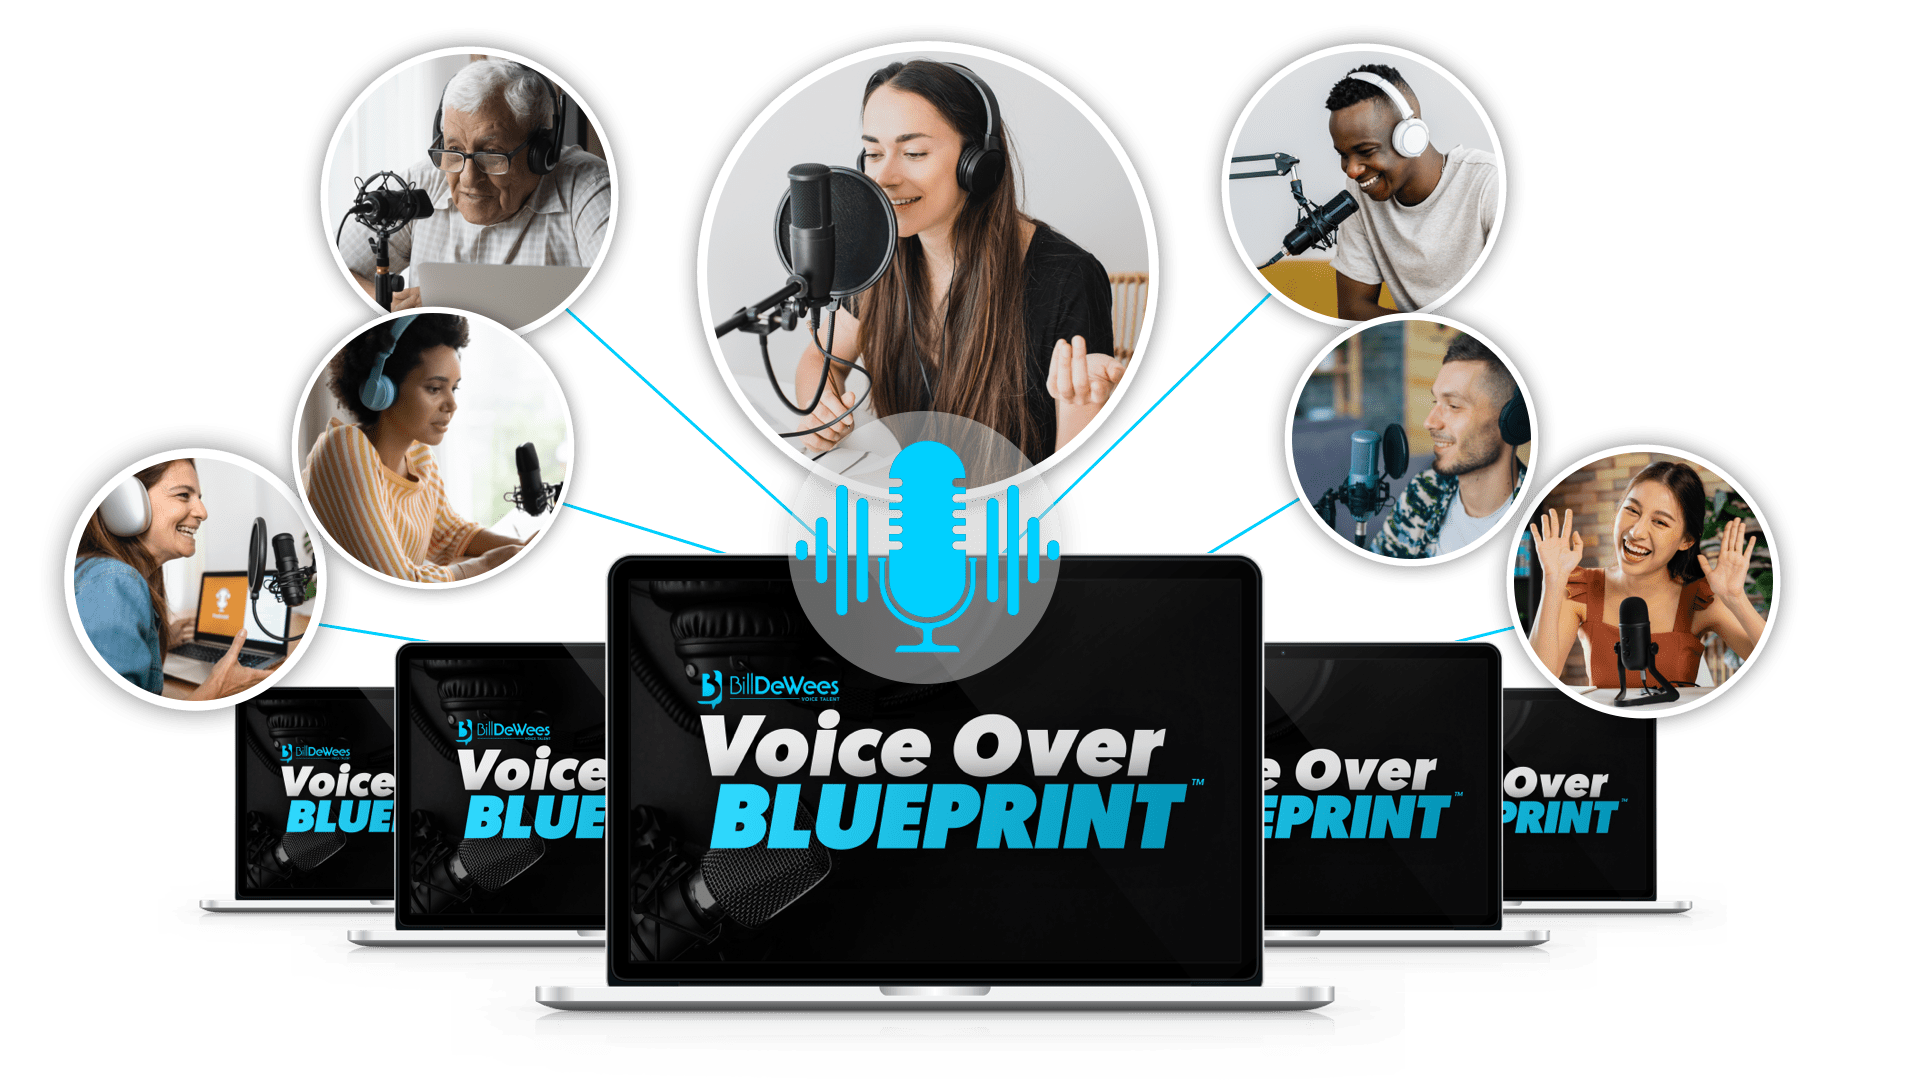 Bill DeWees Voice Over Blueprint 3.0